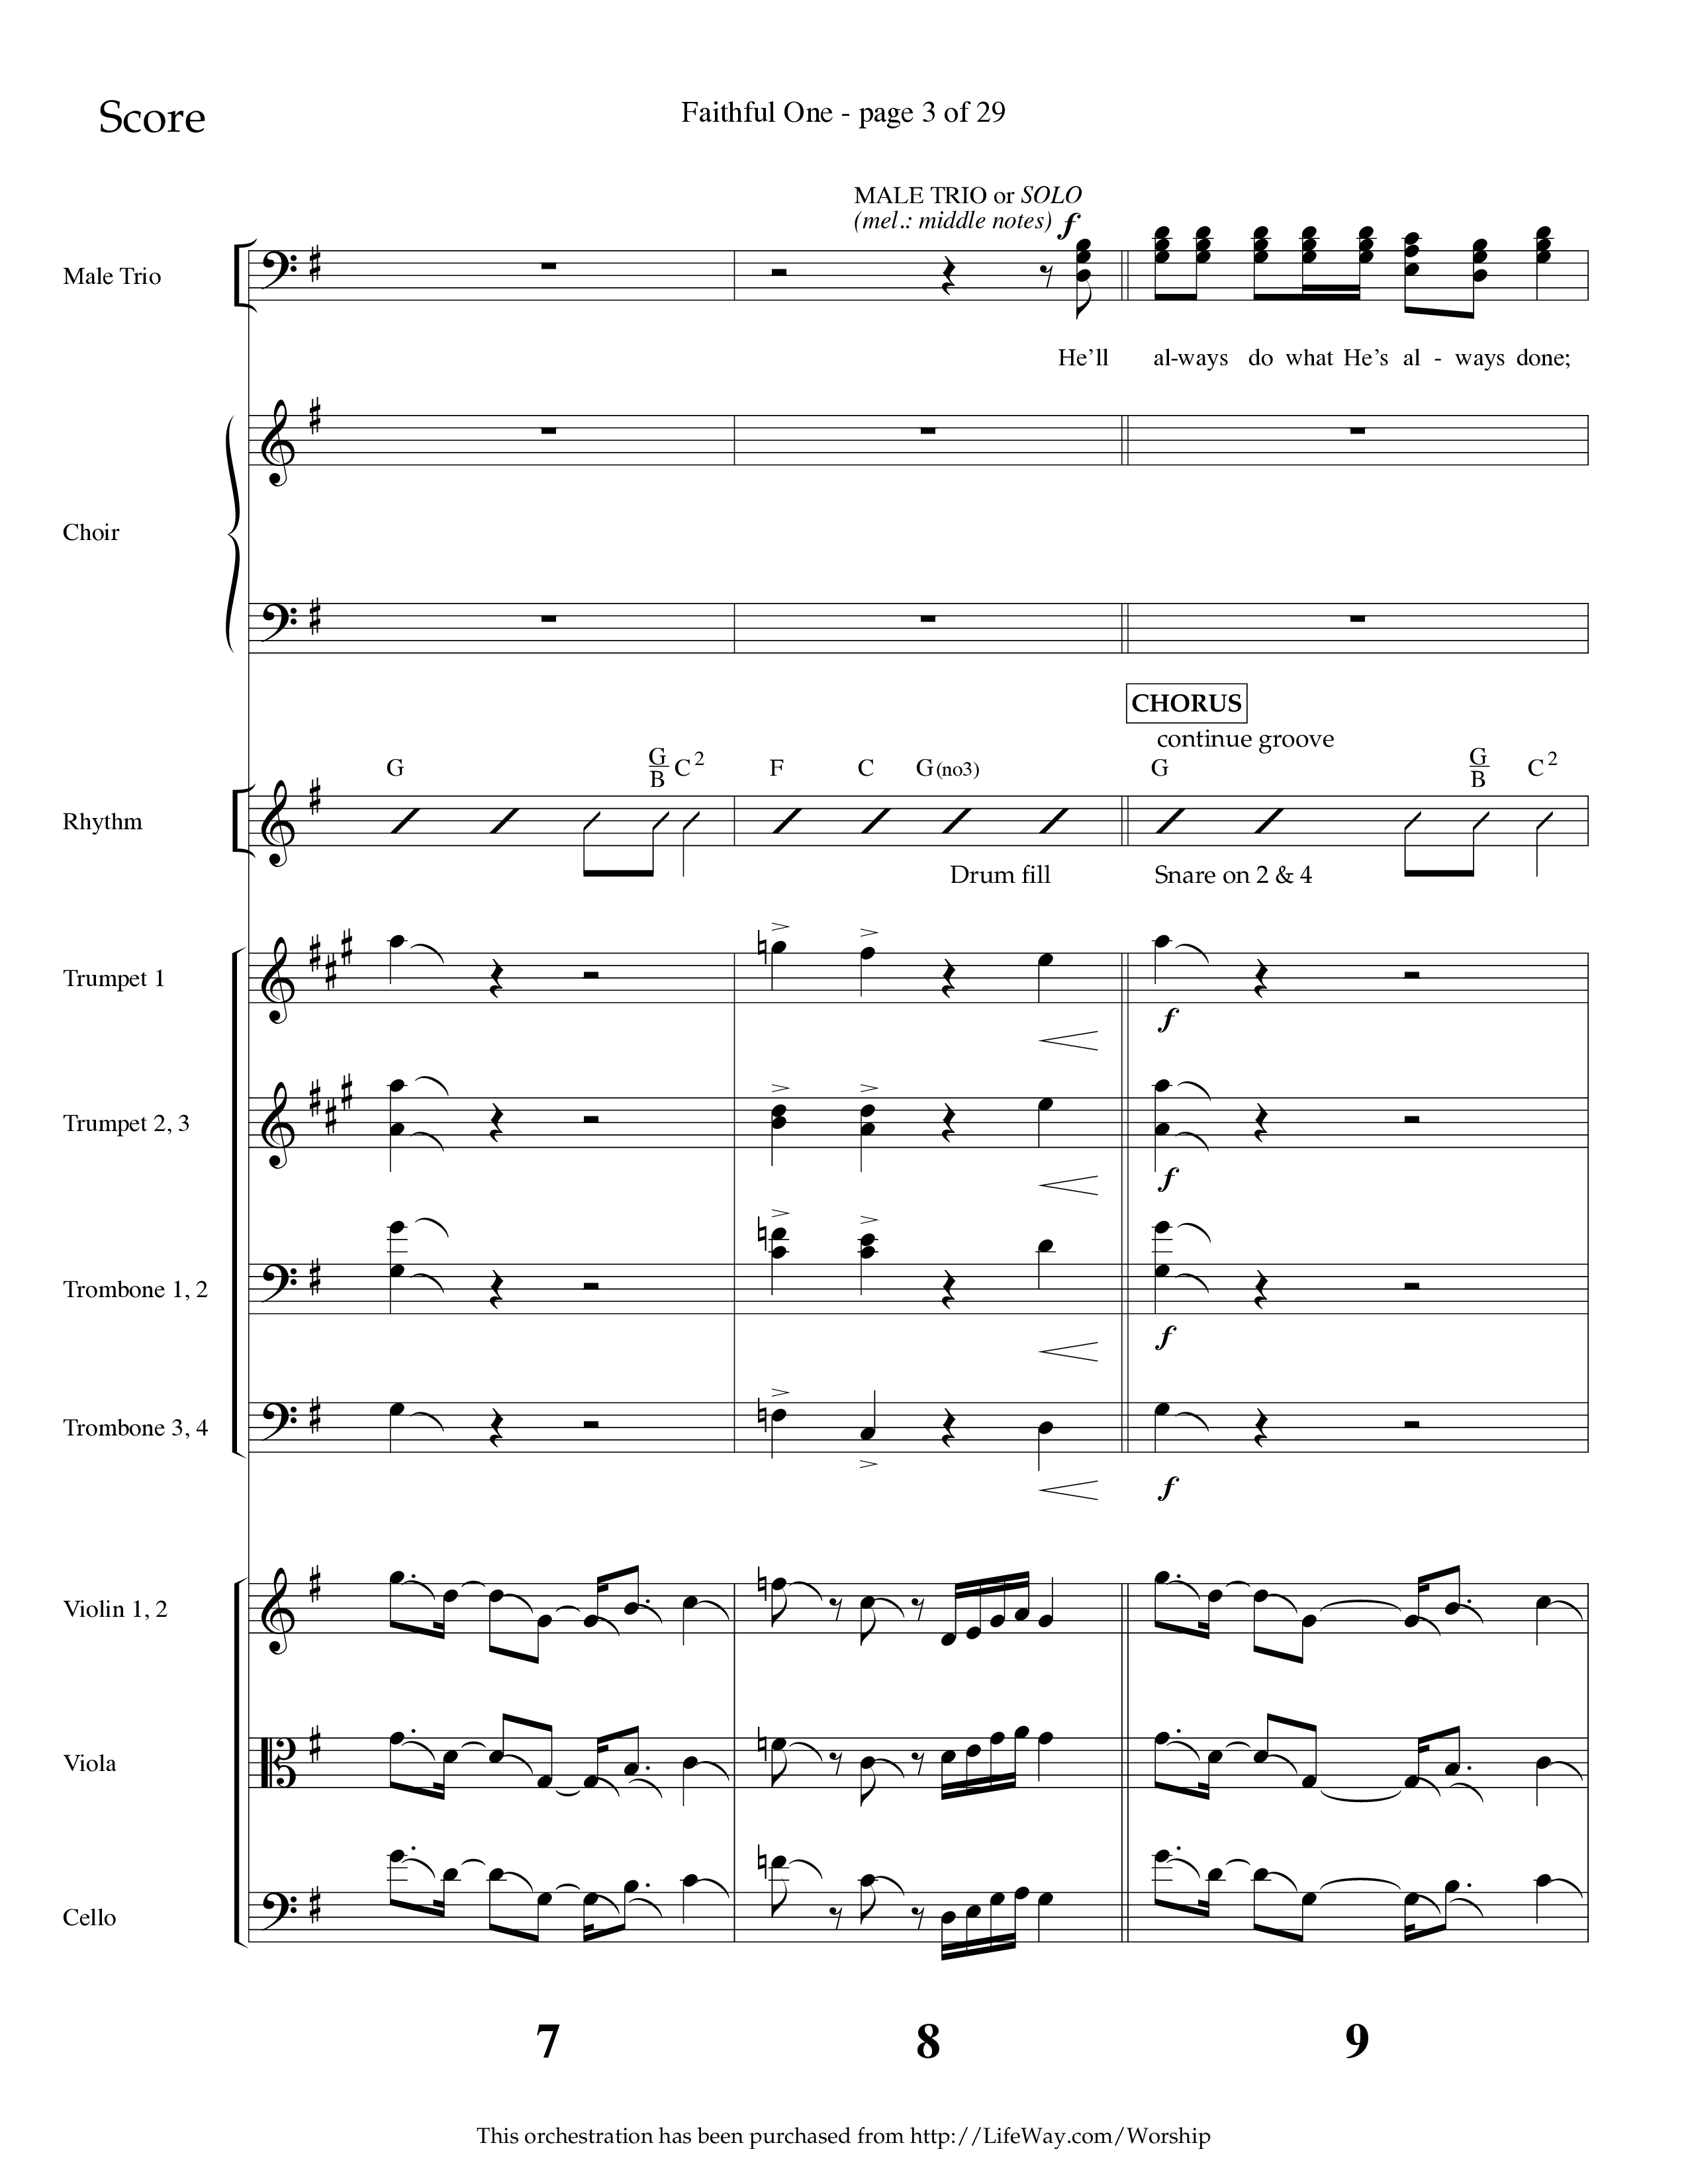 Faithful One (Choral Anthem SATB) Conductor's Score (Lifeway Choral / Arr. Cliff Duren)